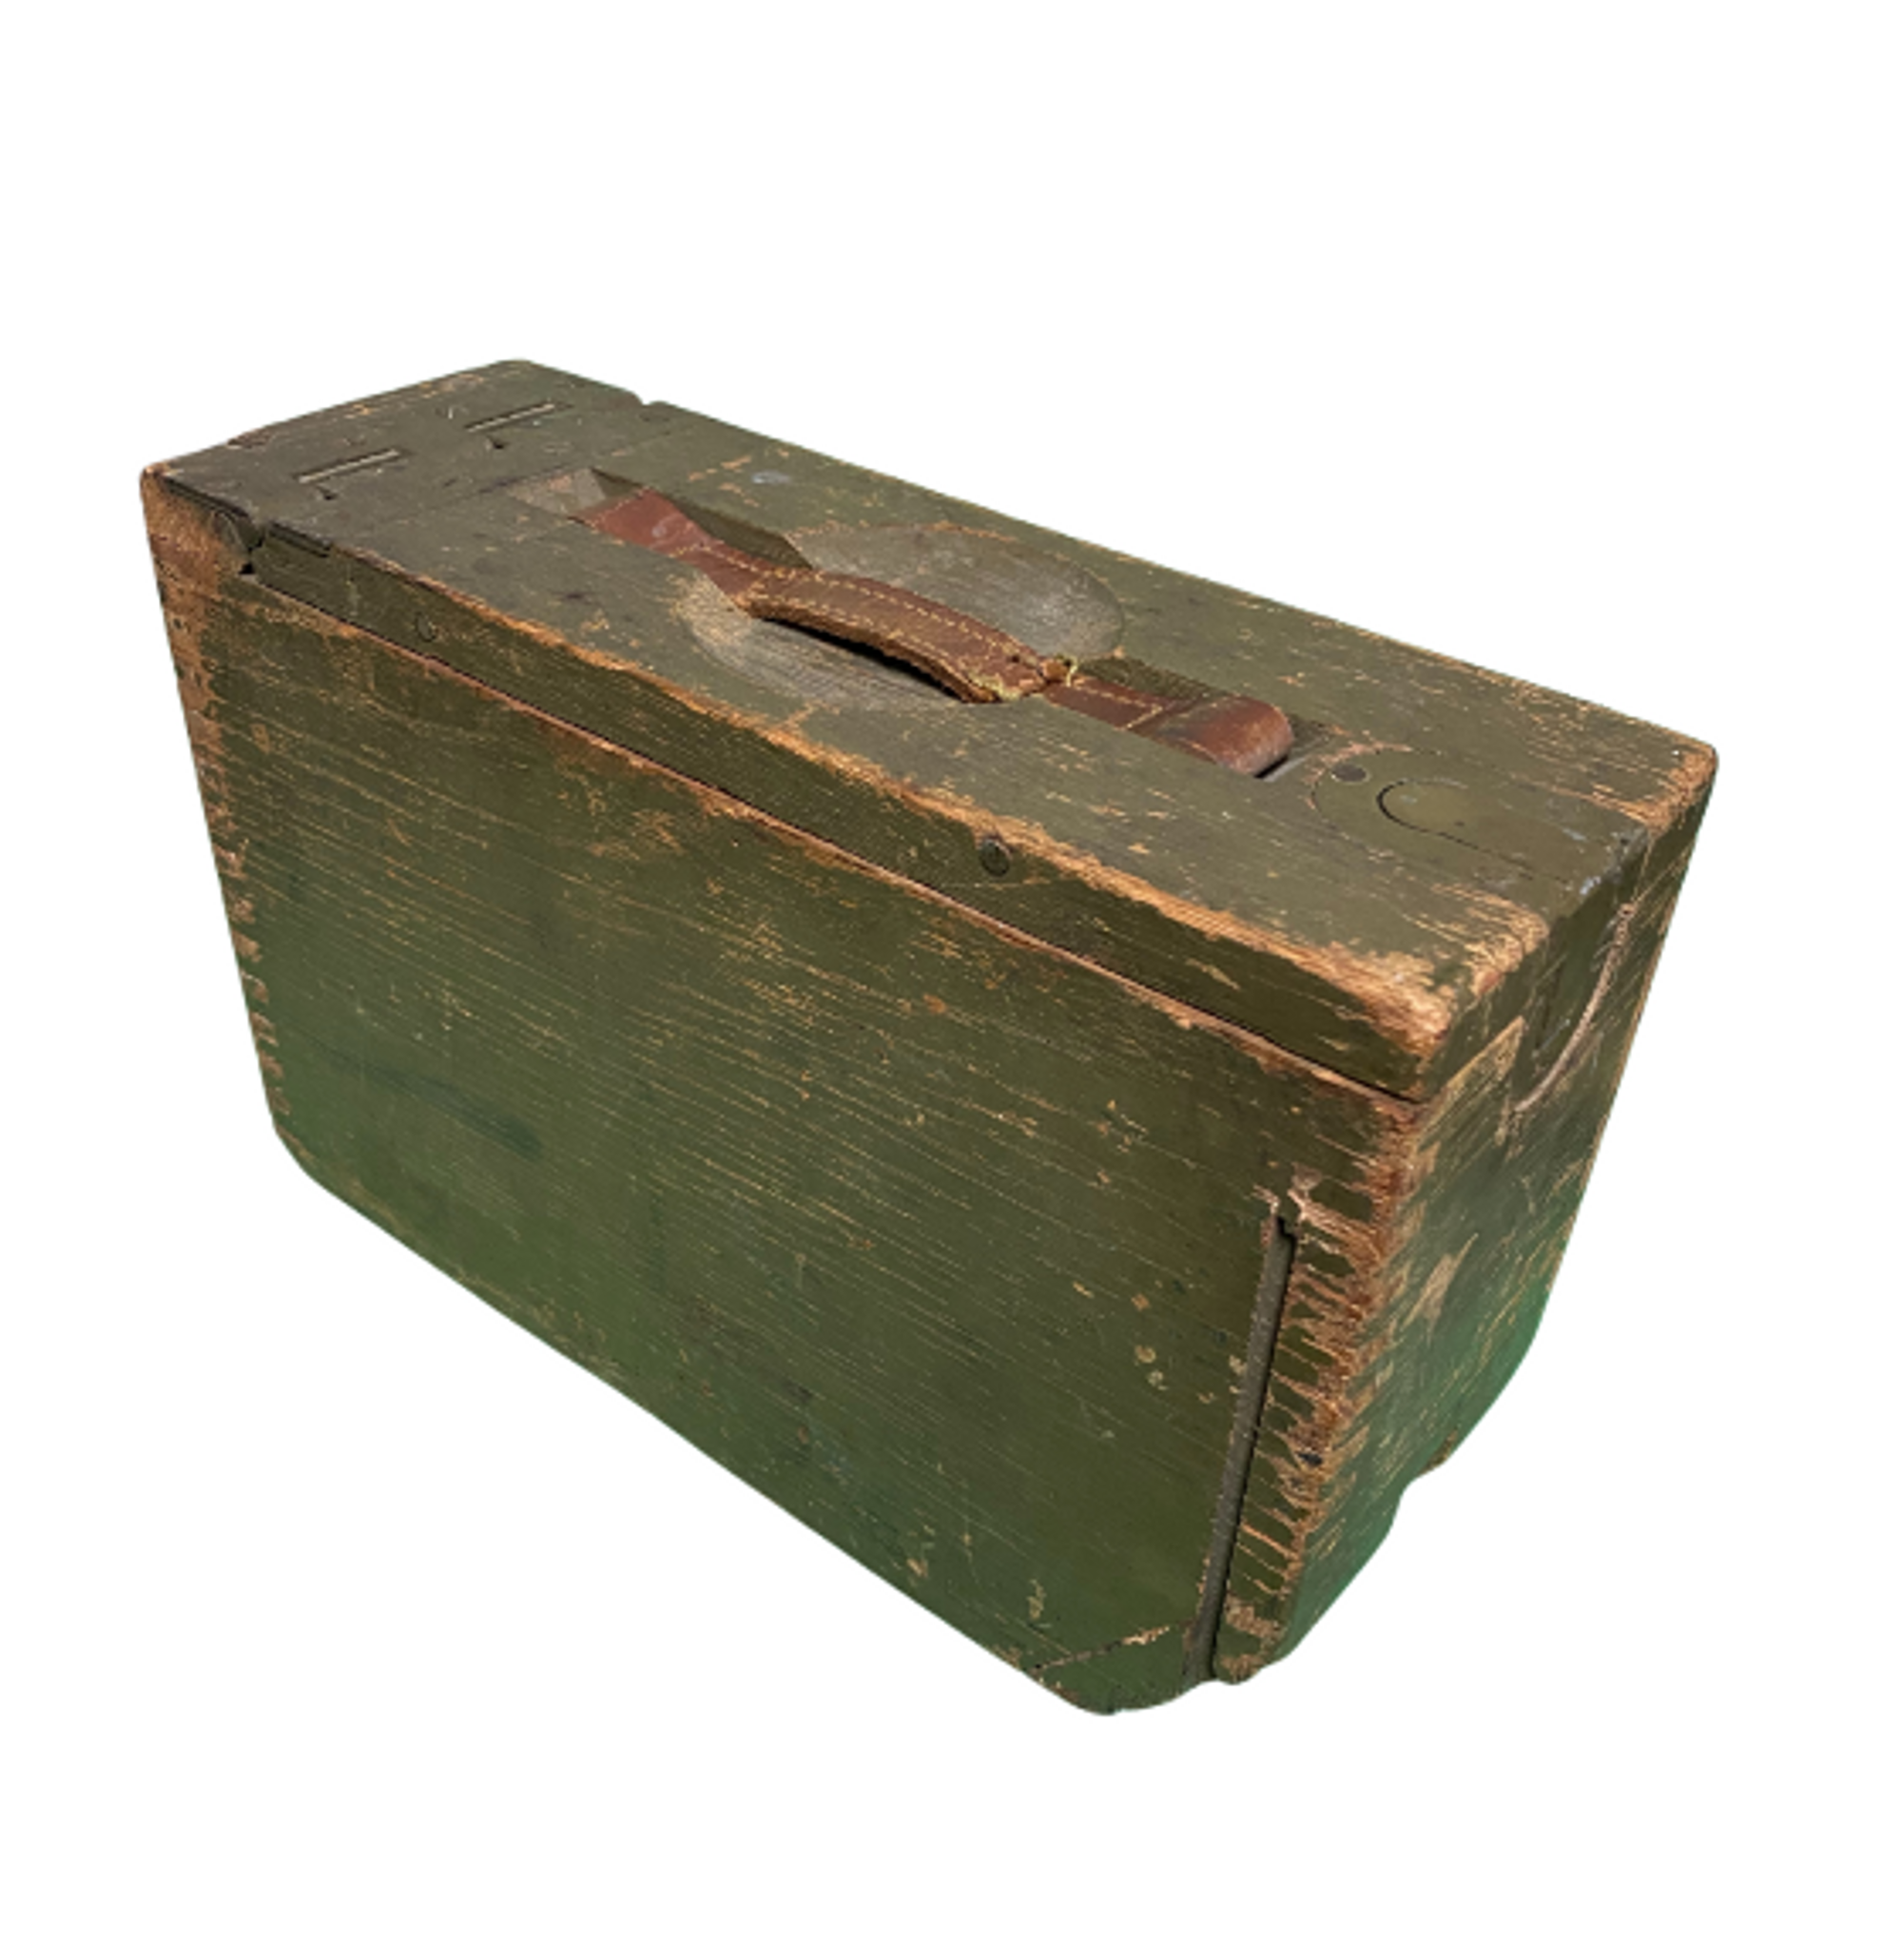 Sold at Auction: WW1 American 1918 BAR Ammunition Belt Pouches